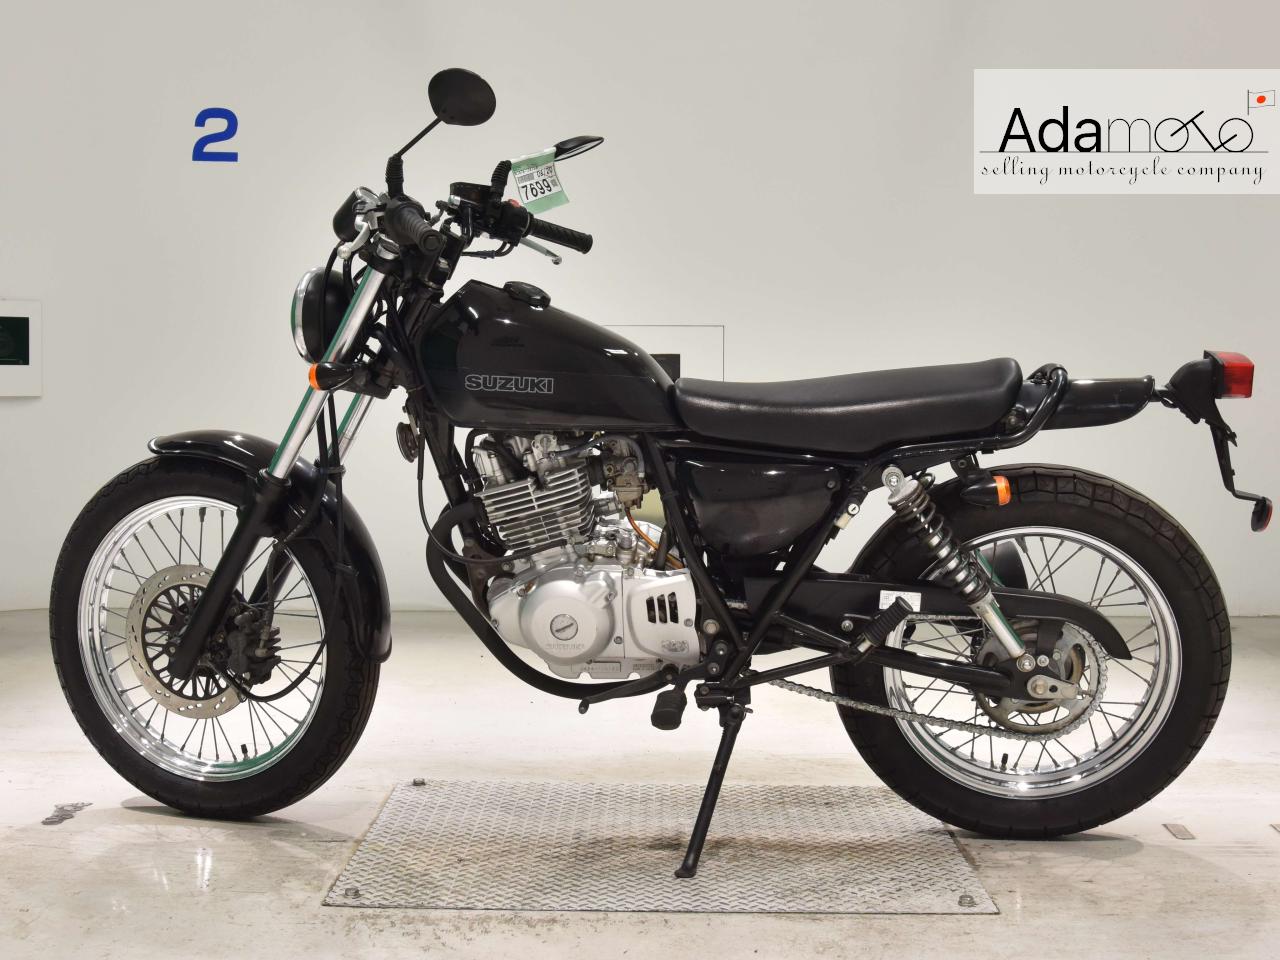 Suzuki GRASSTRACKER BIGBOY - Adamoto - Motorcycles from Japan